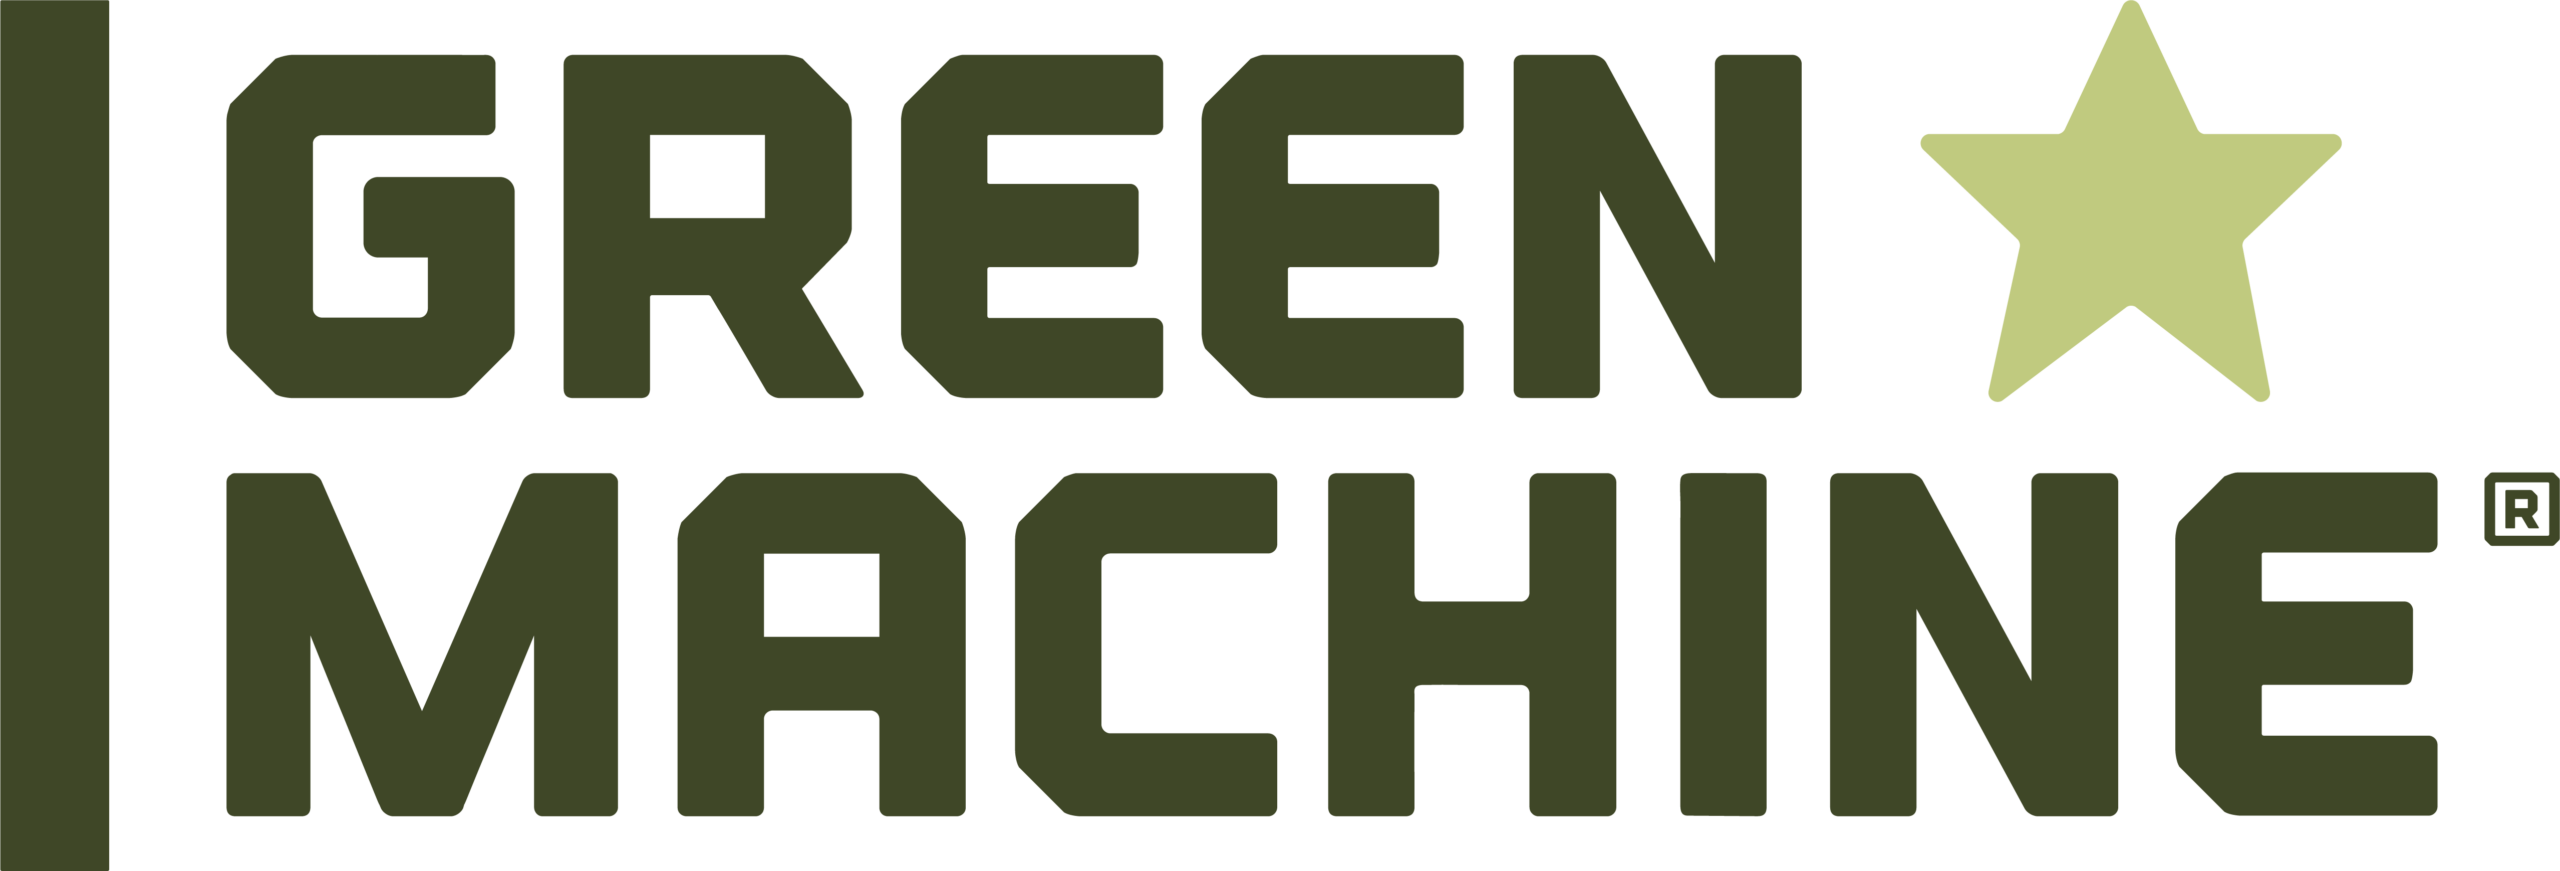 Emily Thorsen GreenMachine Logo Color